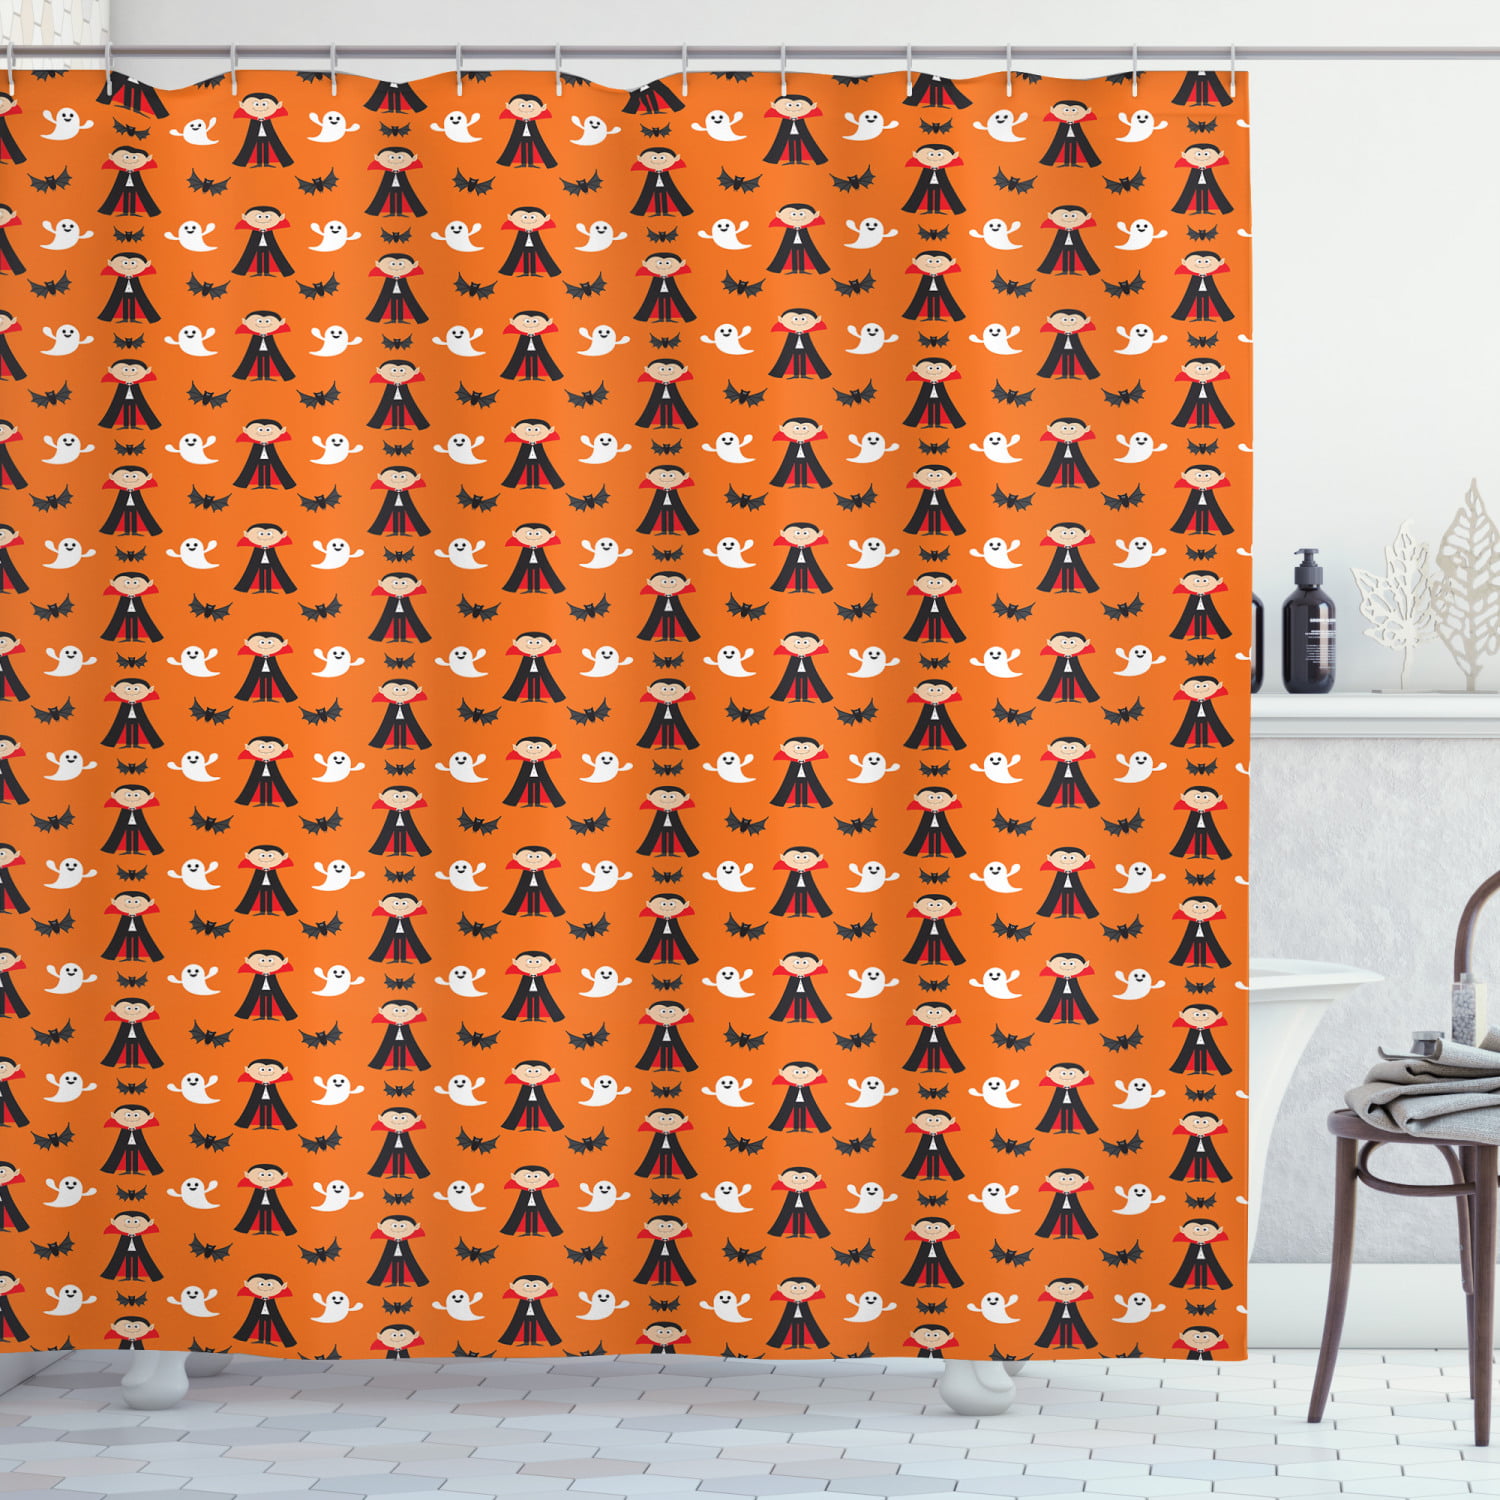 Boxer Dog Pet Animal Bathroom Shower Curtain Waterproof Fabric & Hooks 71*71inch 